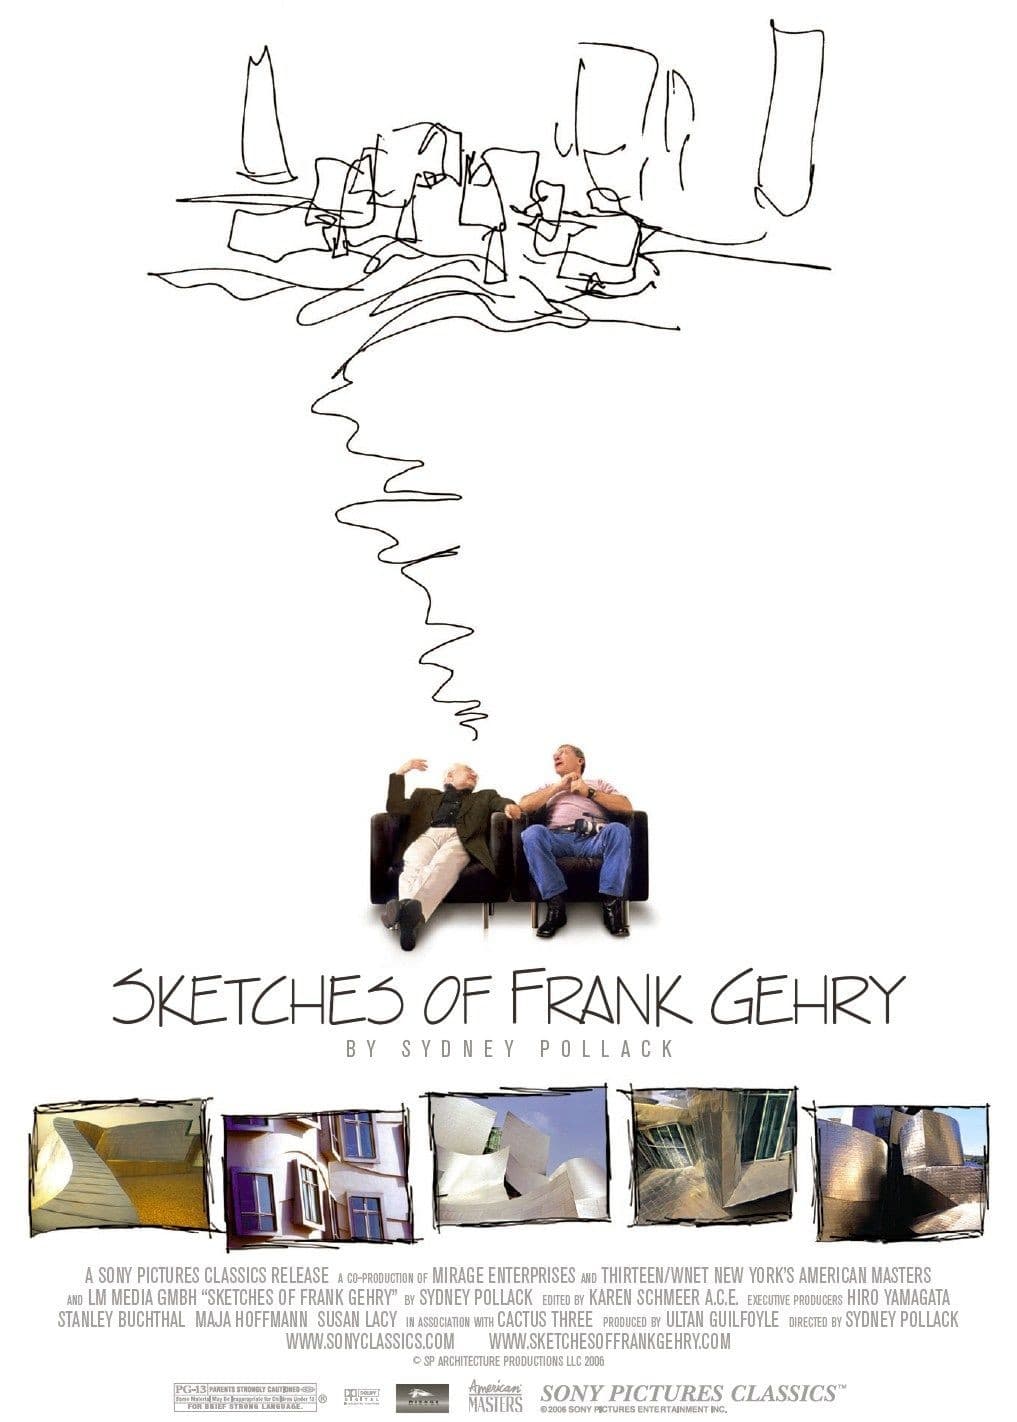 Plakat von "Sketches of Frank Gehry"